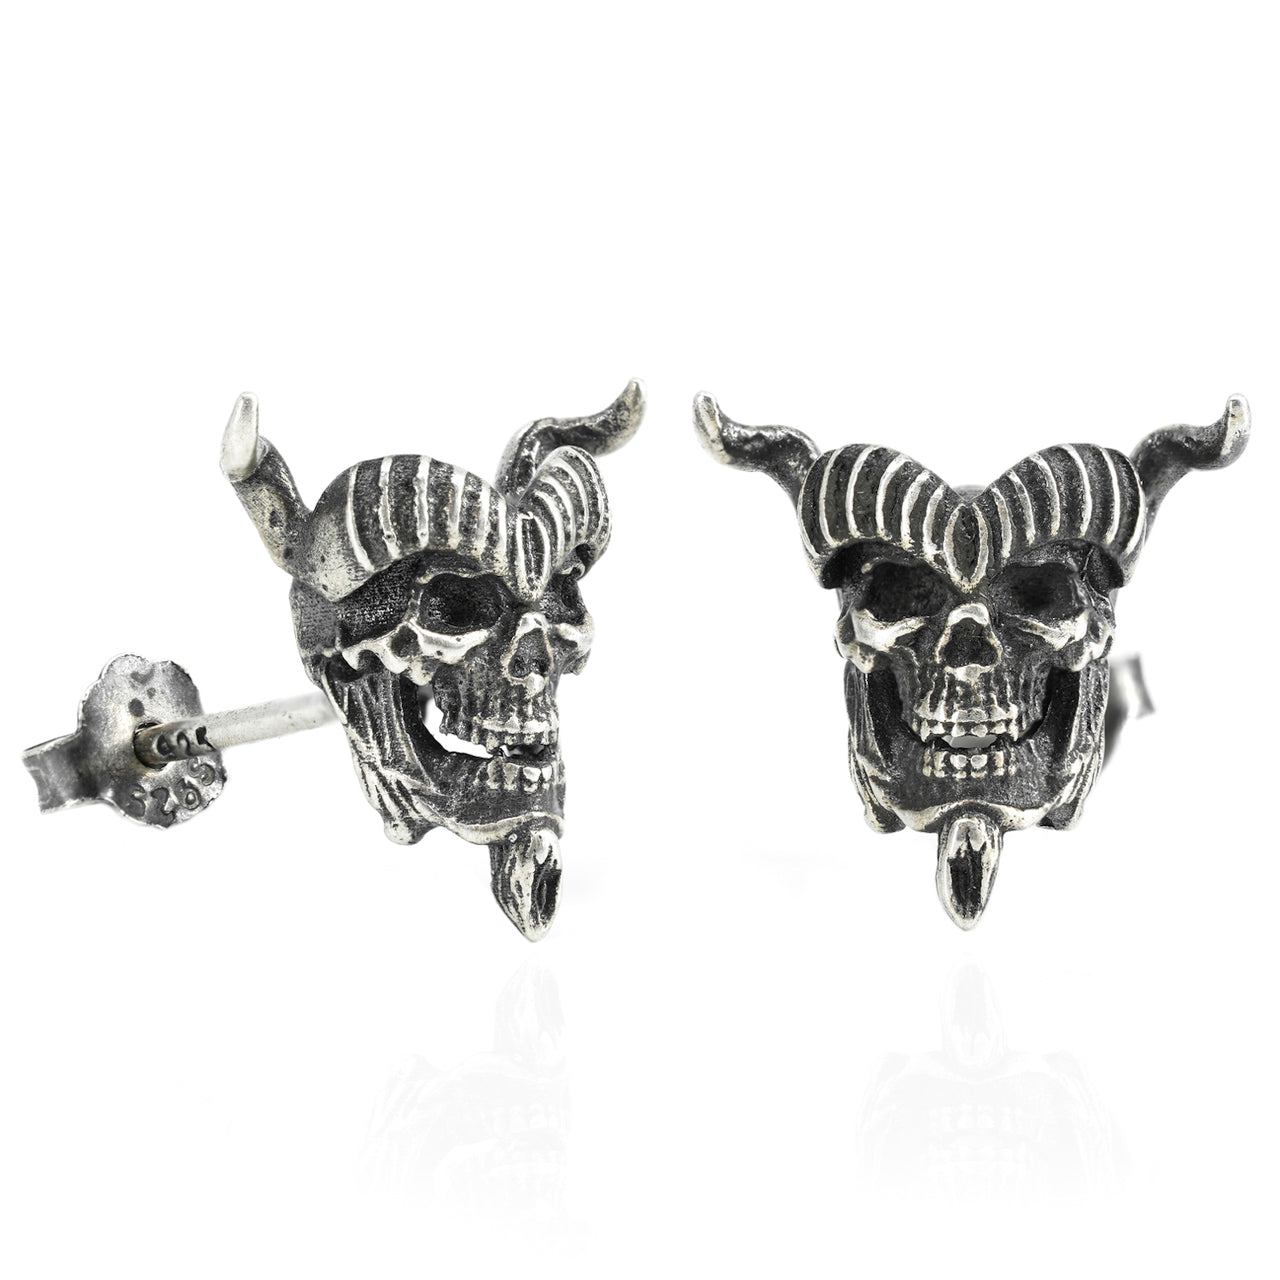 S’Tan Skull Stud Earrings - Bloodstock - Black Feather Design